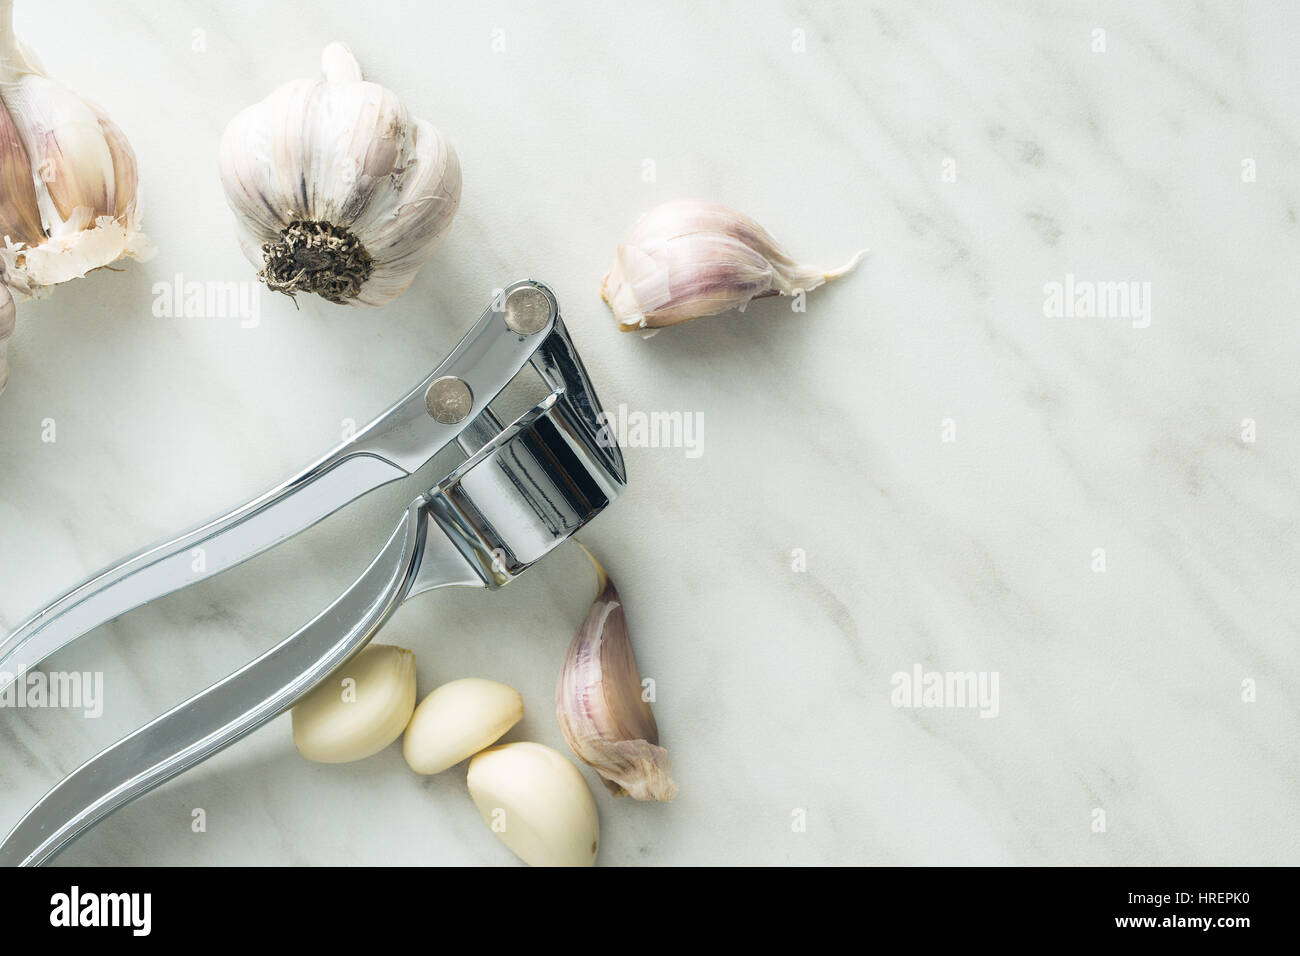 Garlic and garlic press on kitchen table. Top view. Stock Photo